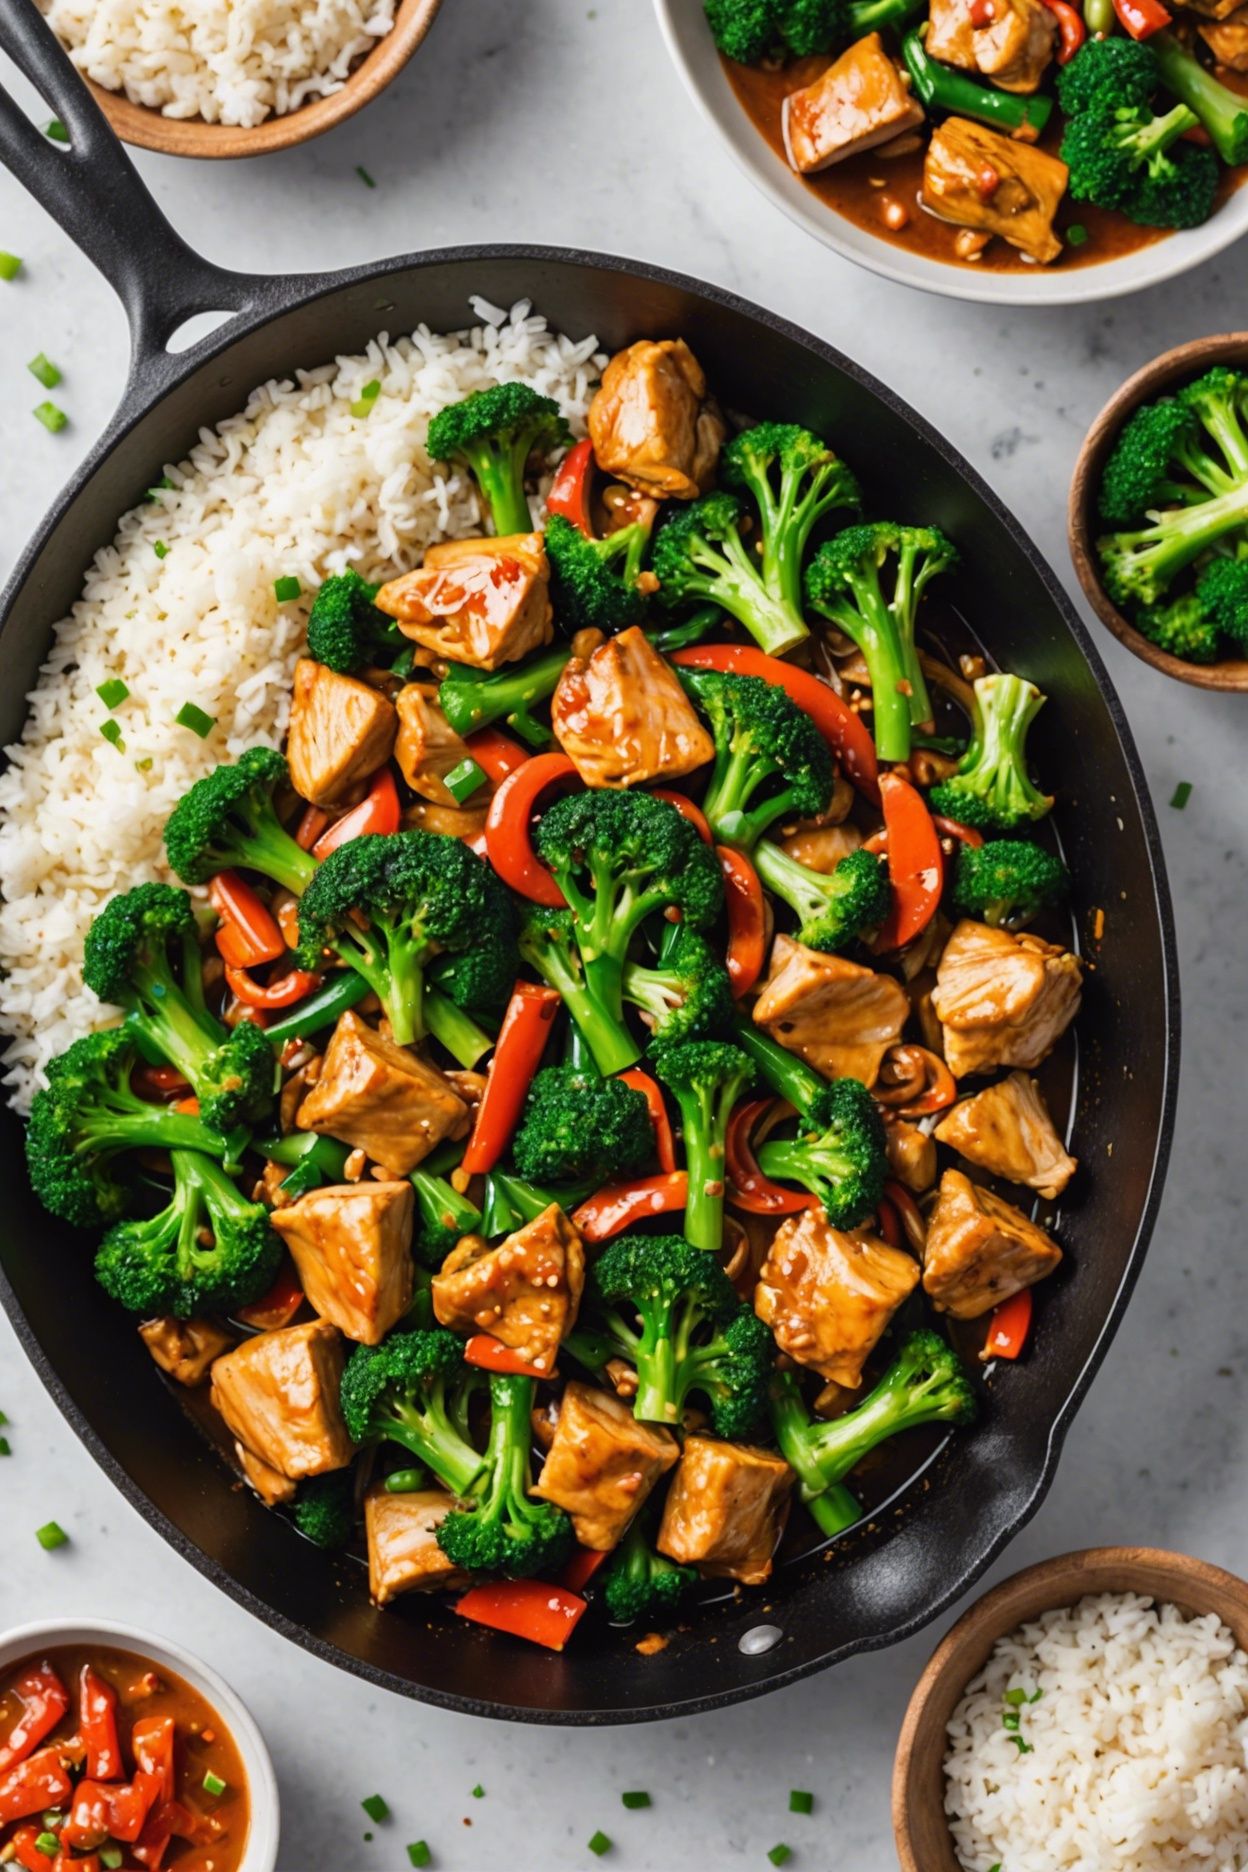 Spicy Chicken Stir Fry With Broccoli